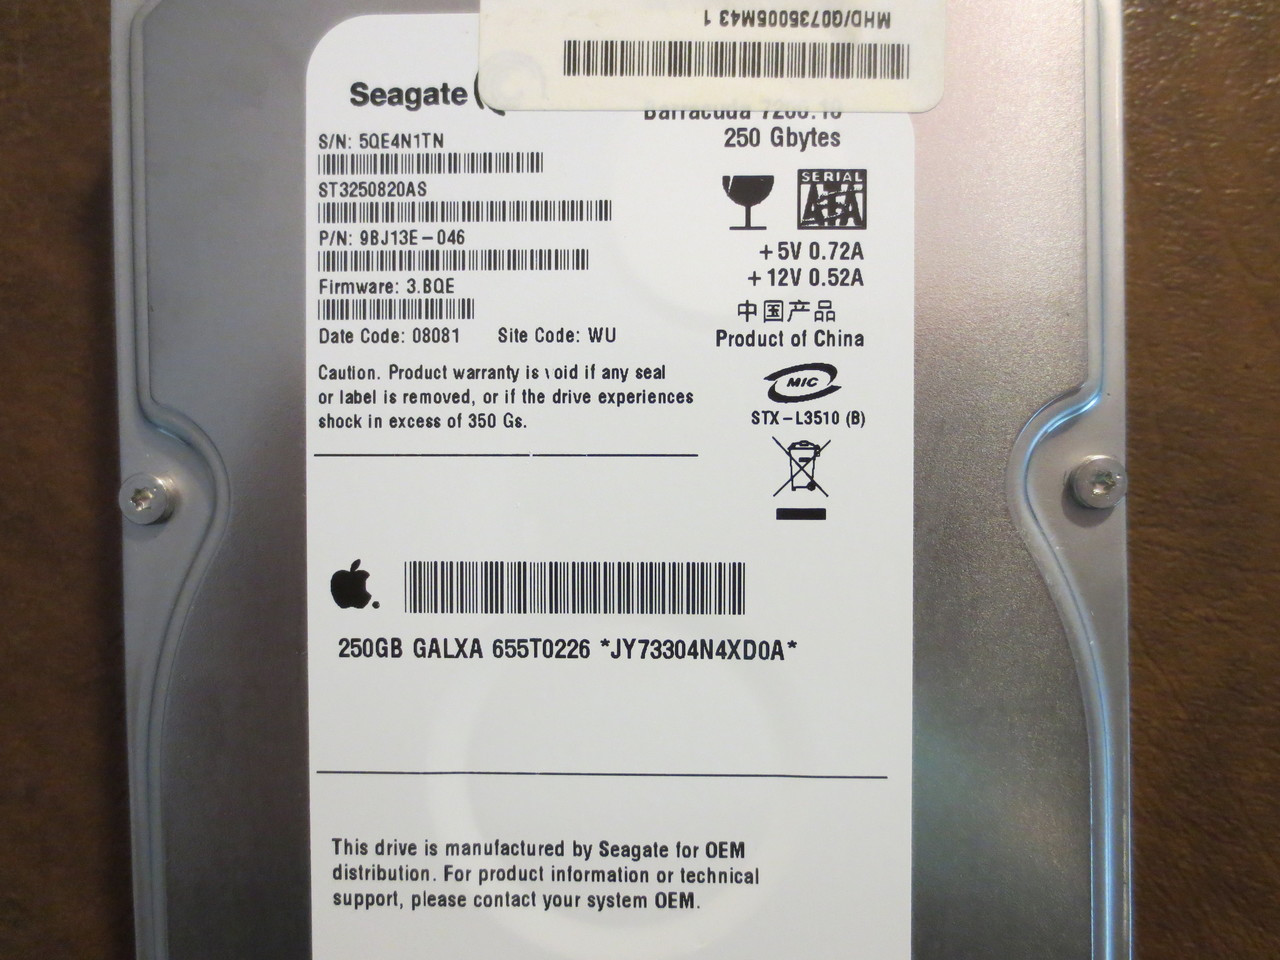 Seagate ST3250820AS 9BJ13E-046 FW:3.BQE WU Apple#655-1357A 250gb Sata -  Effective Electronics